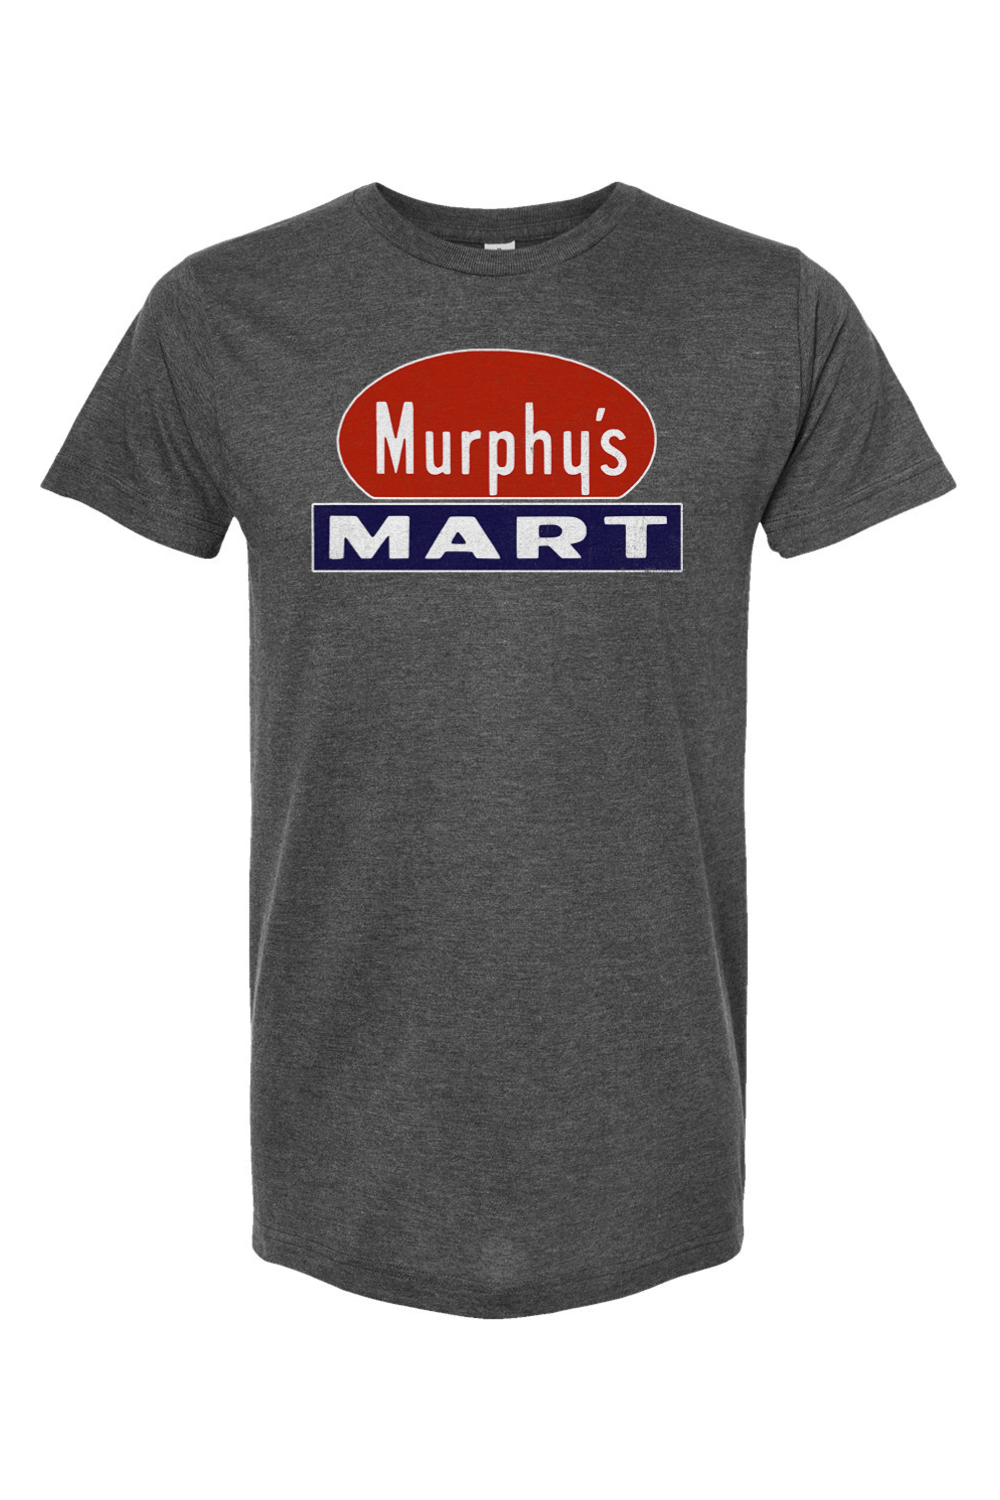 Murphy's Mart - Yinzylvania